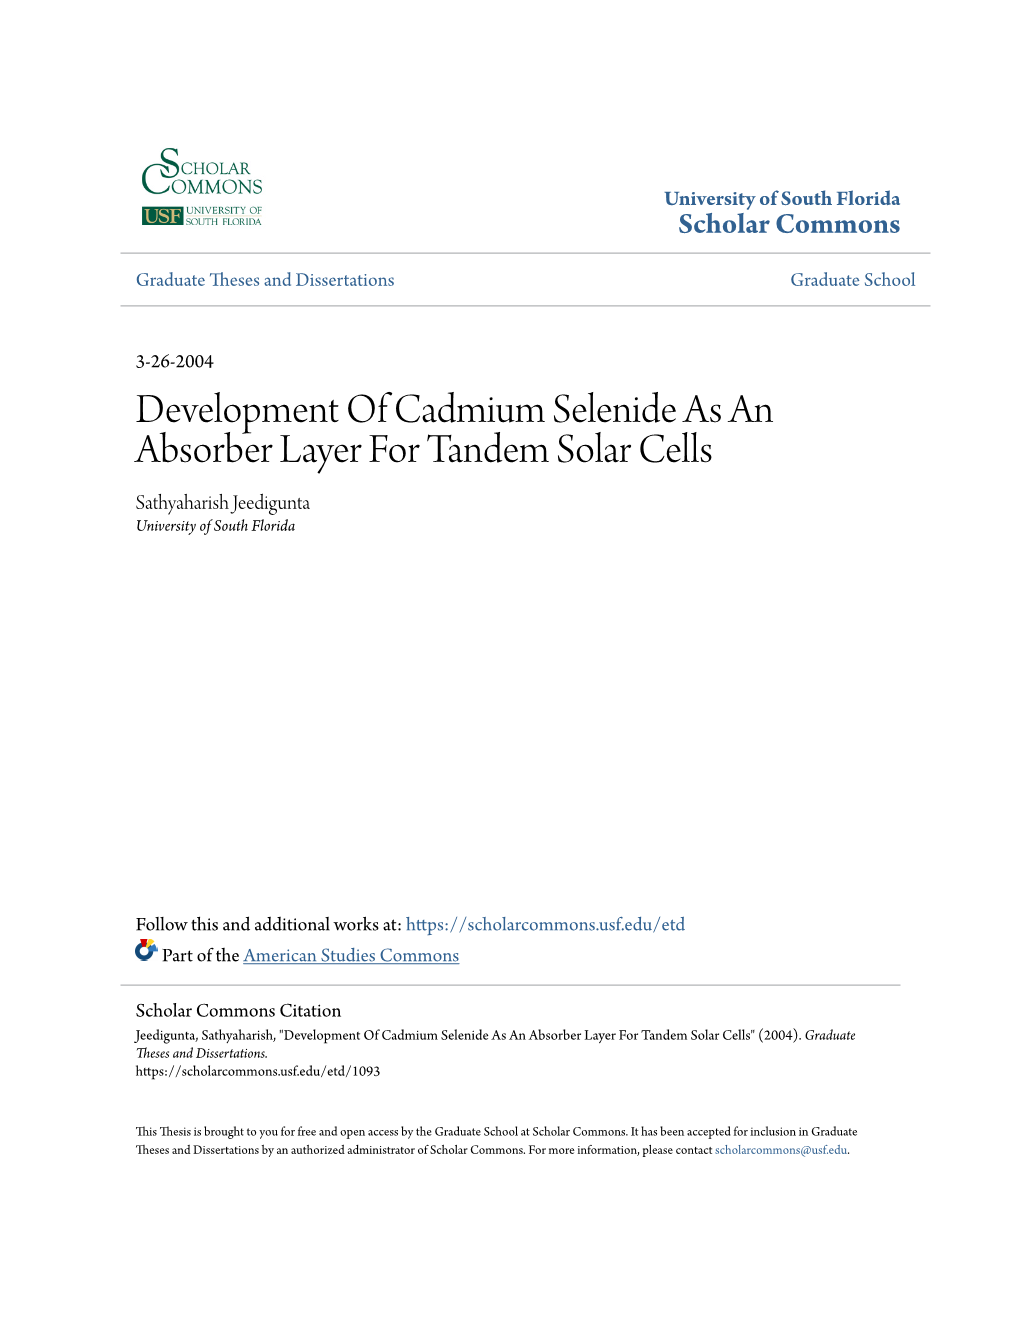 Development of Cadmium Selenide As an Absorber Layer for Tandem Solar Cells Sathyaharish Jeedigunta University of South Florida